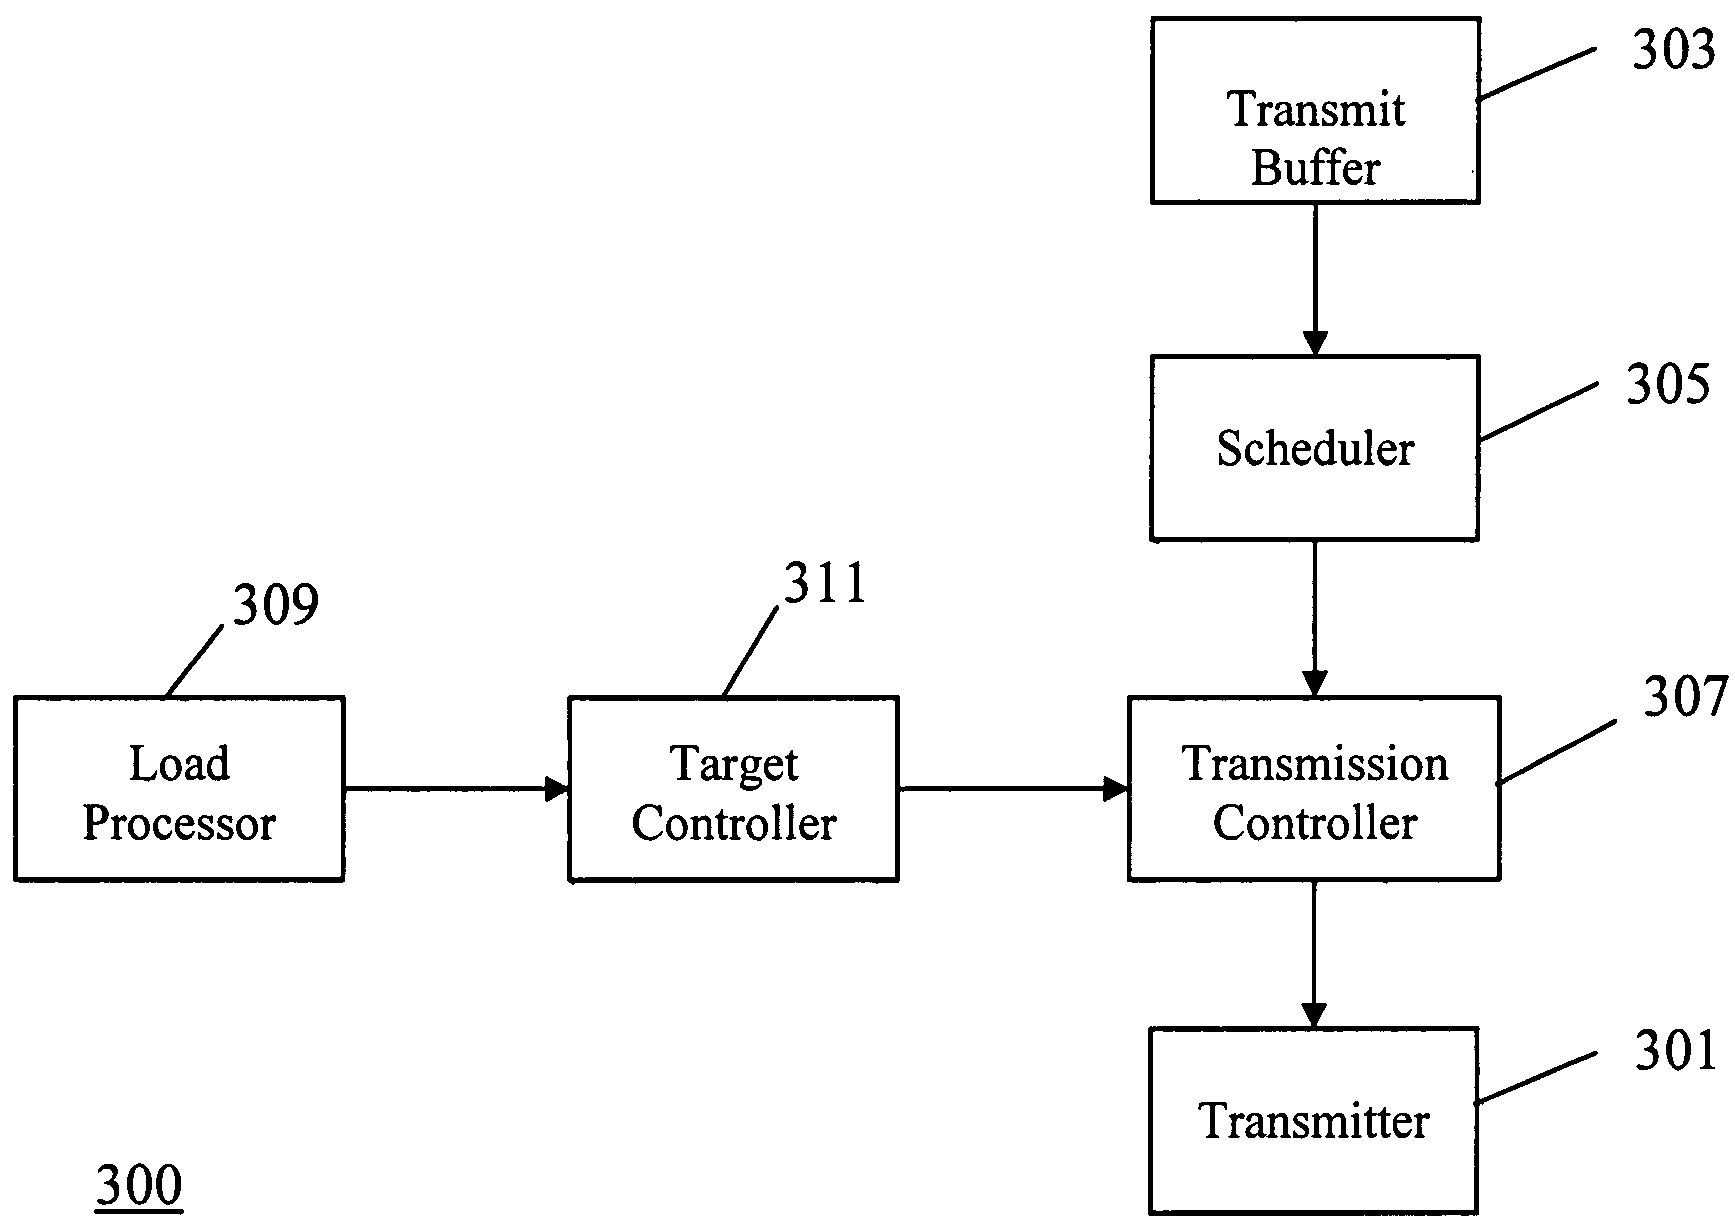 Retransmission scheme in a cellular communication system